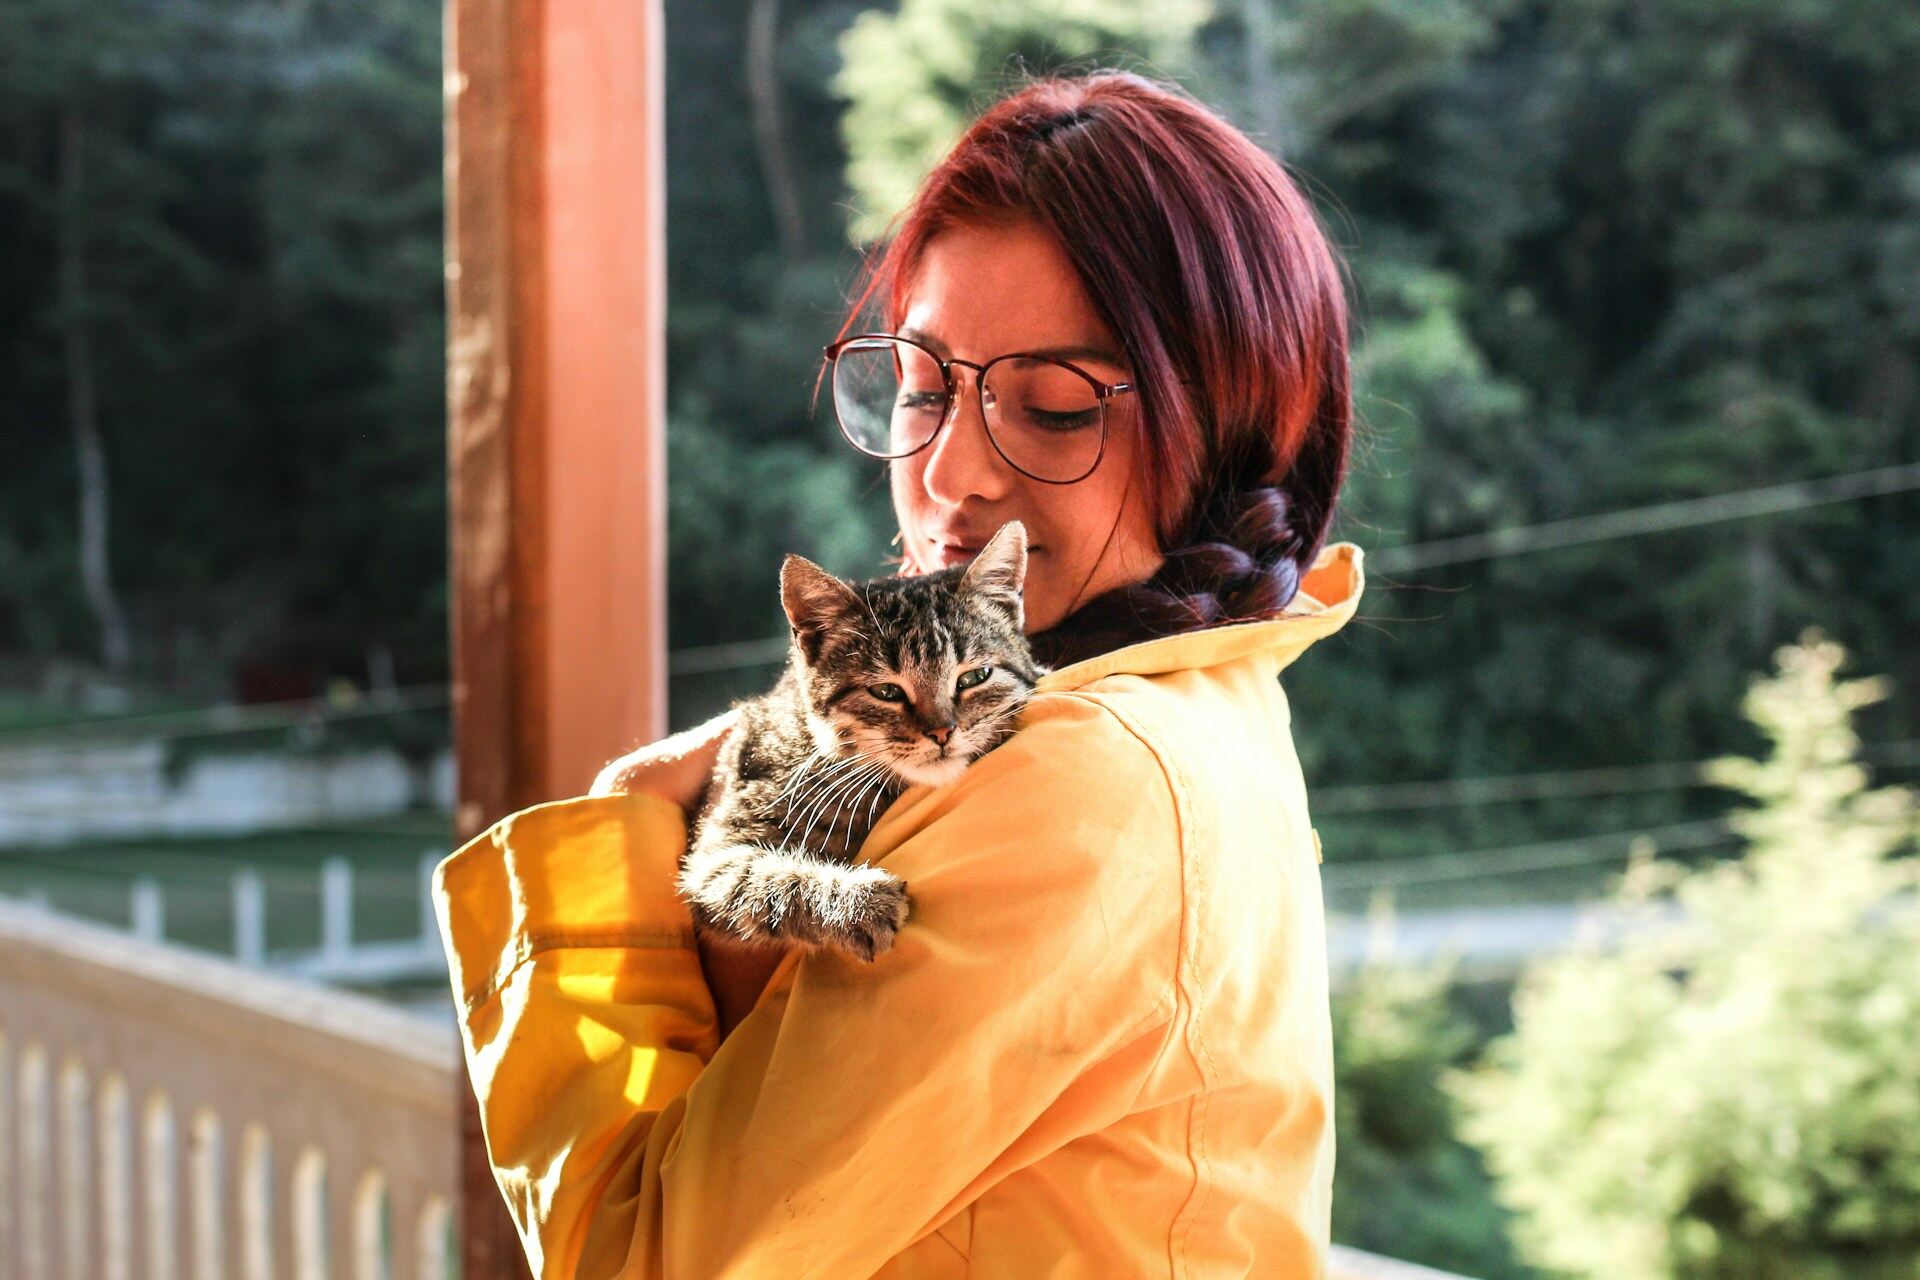 A woman hugging a sick cat outdoors